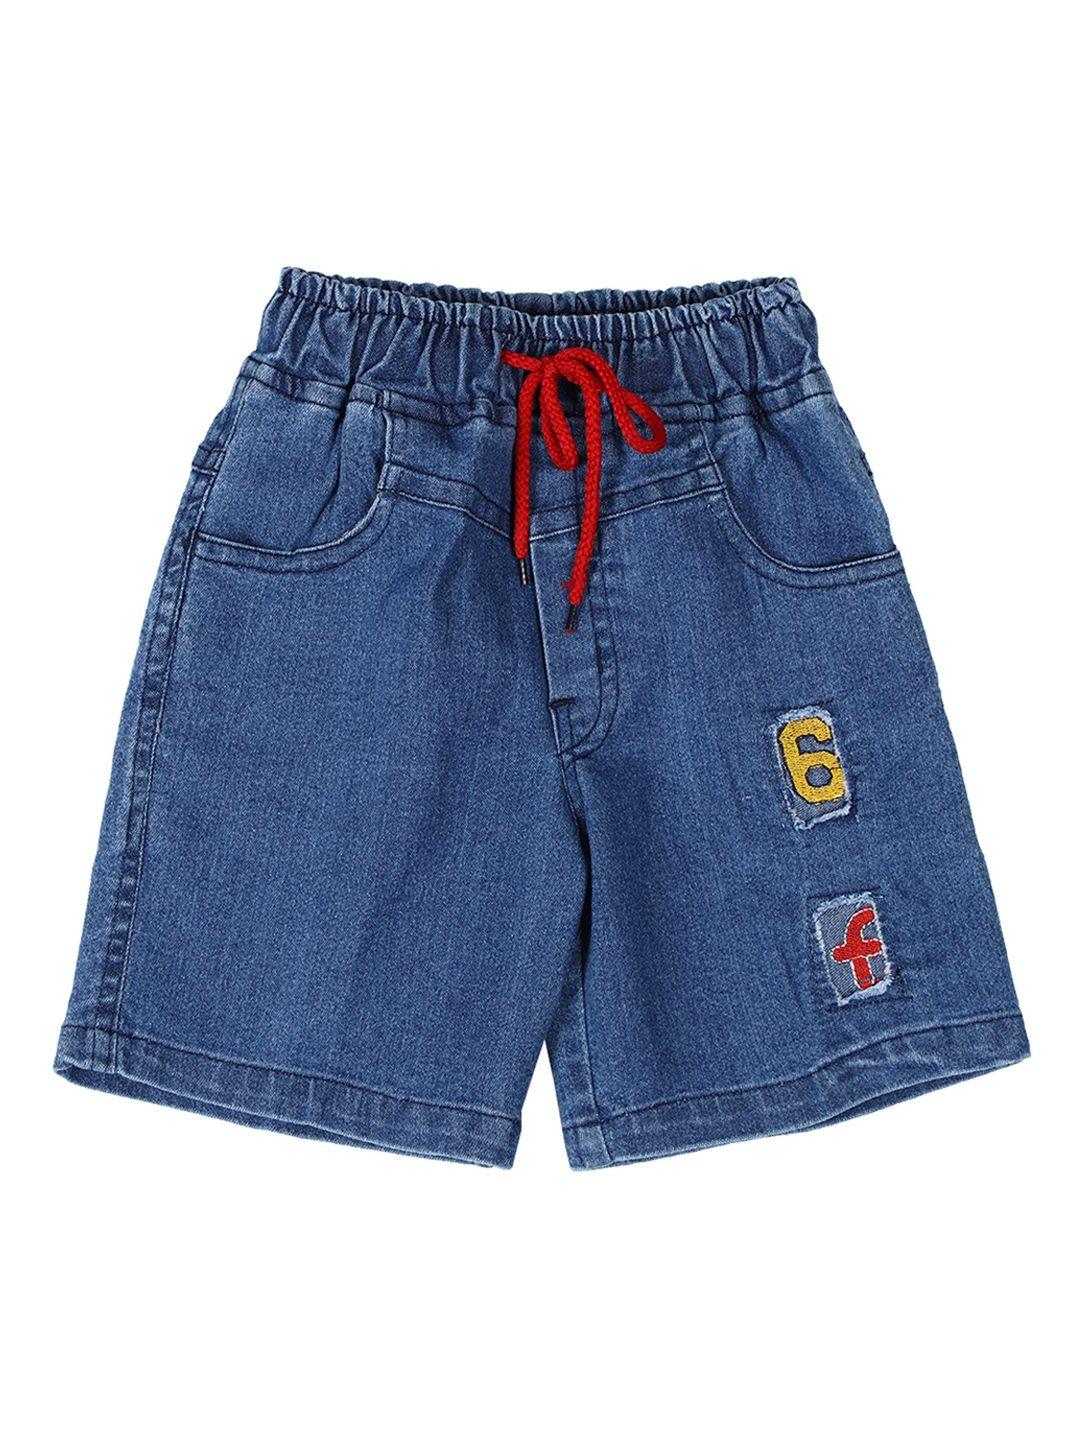 cremlin clothing unisex kids blue denim shorts